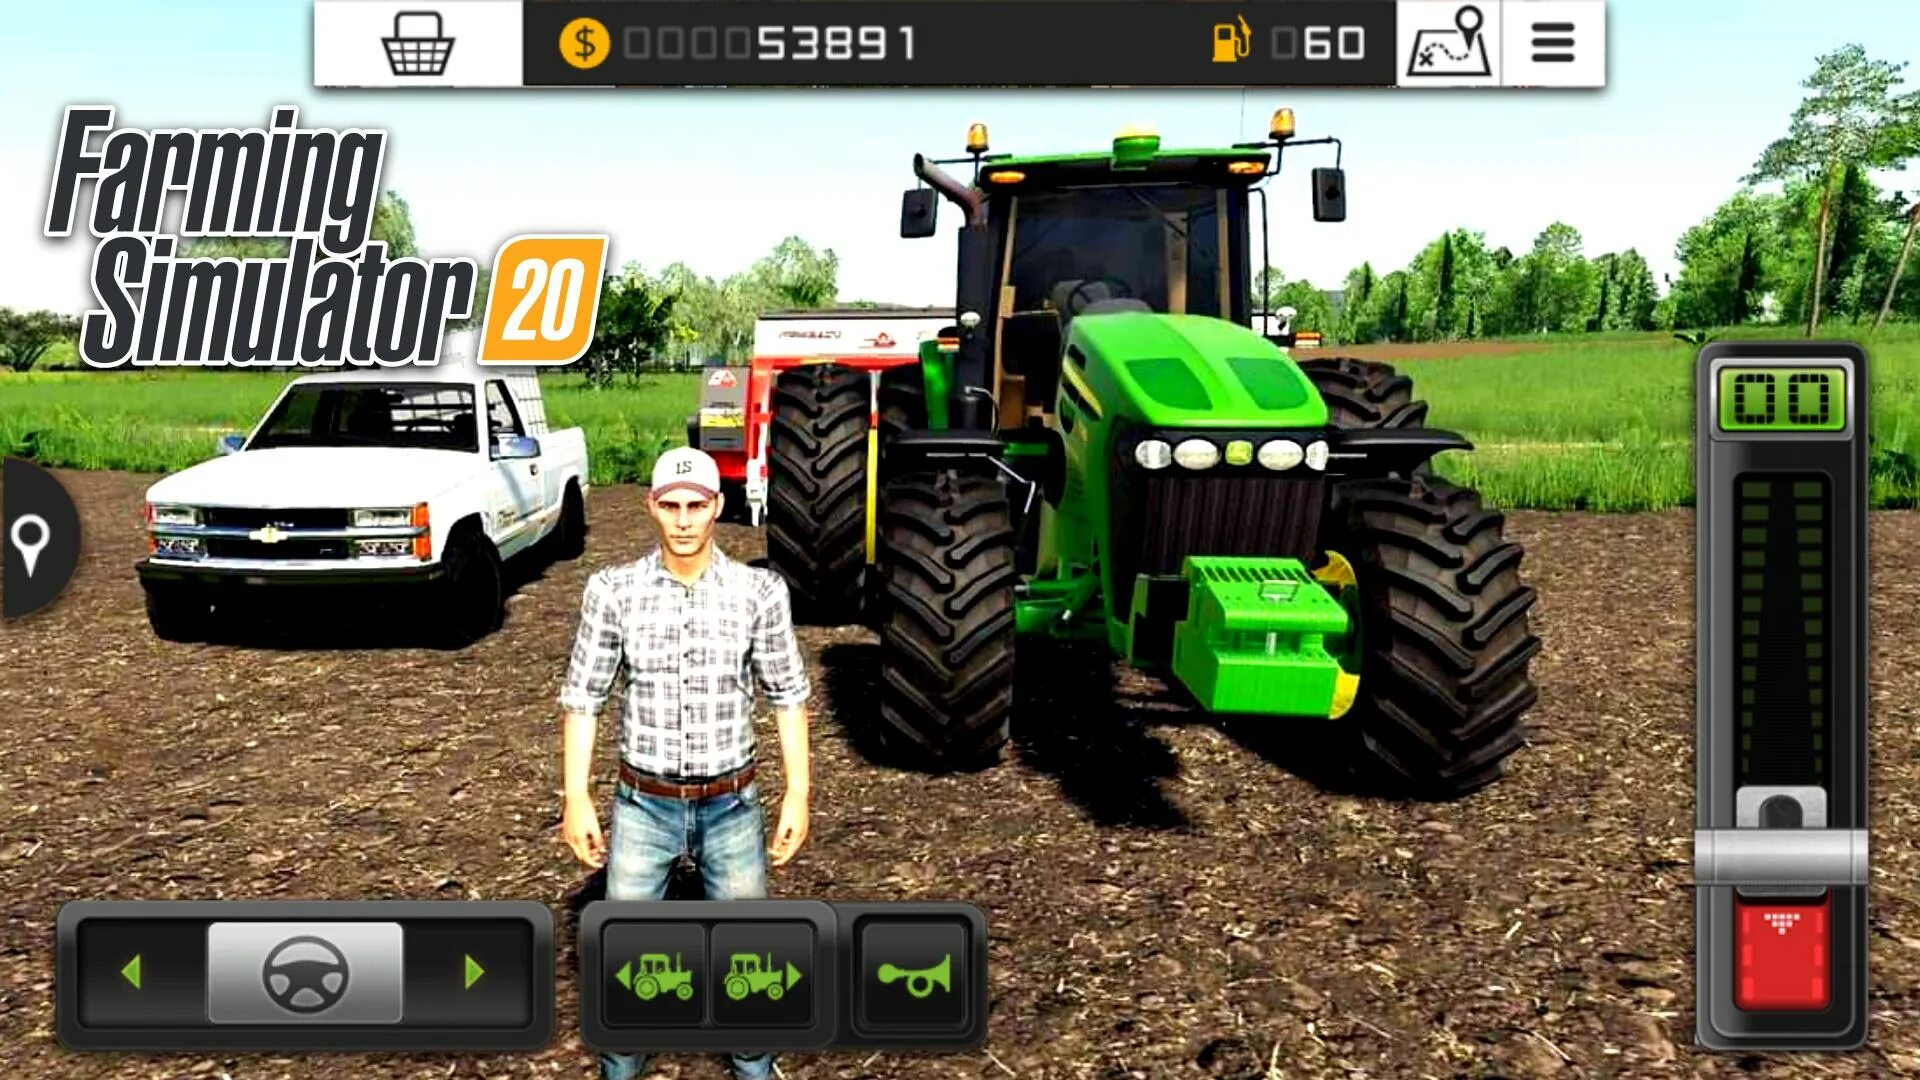 Фермер симулятор 20. Ферма симулятор 2020. Симулятор тракториста 20. Farming Simulator 2020 mobile. Ферма 20 версия